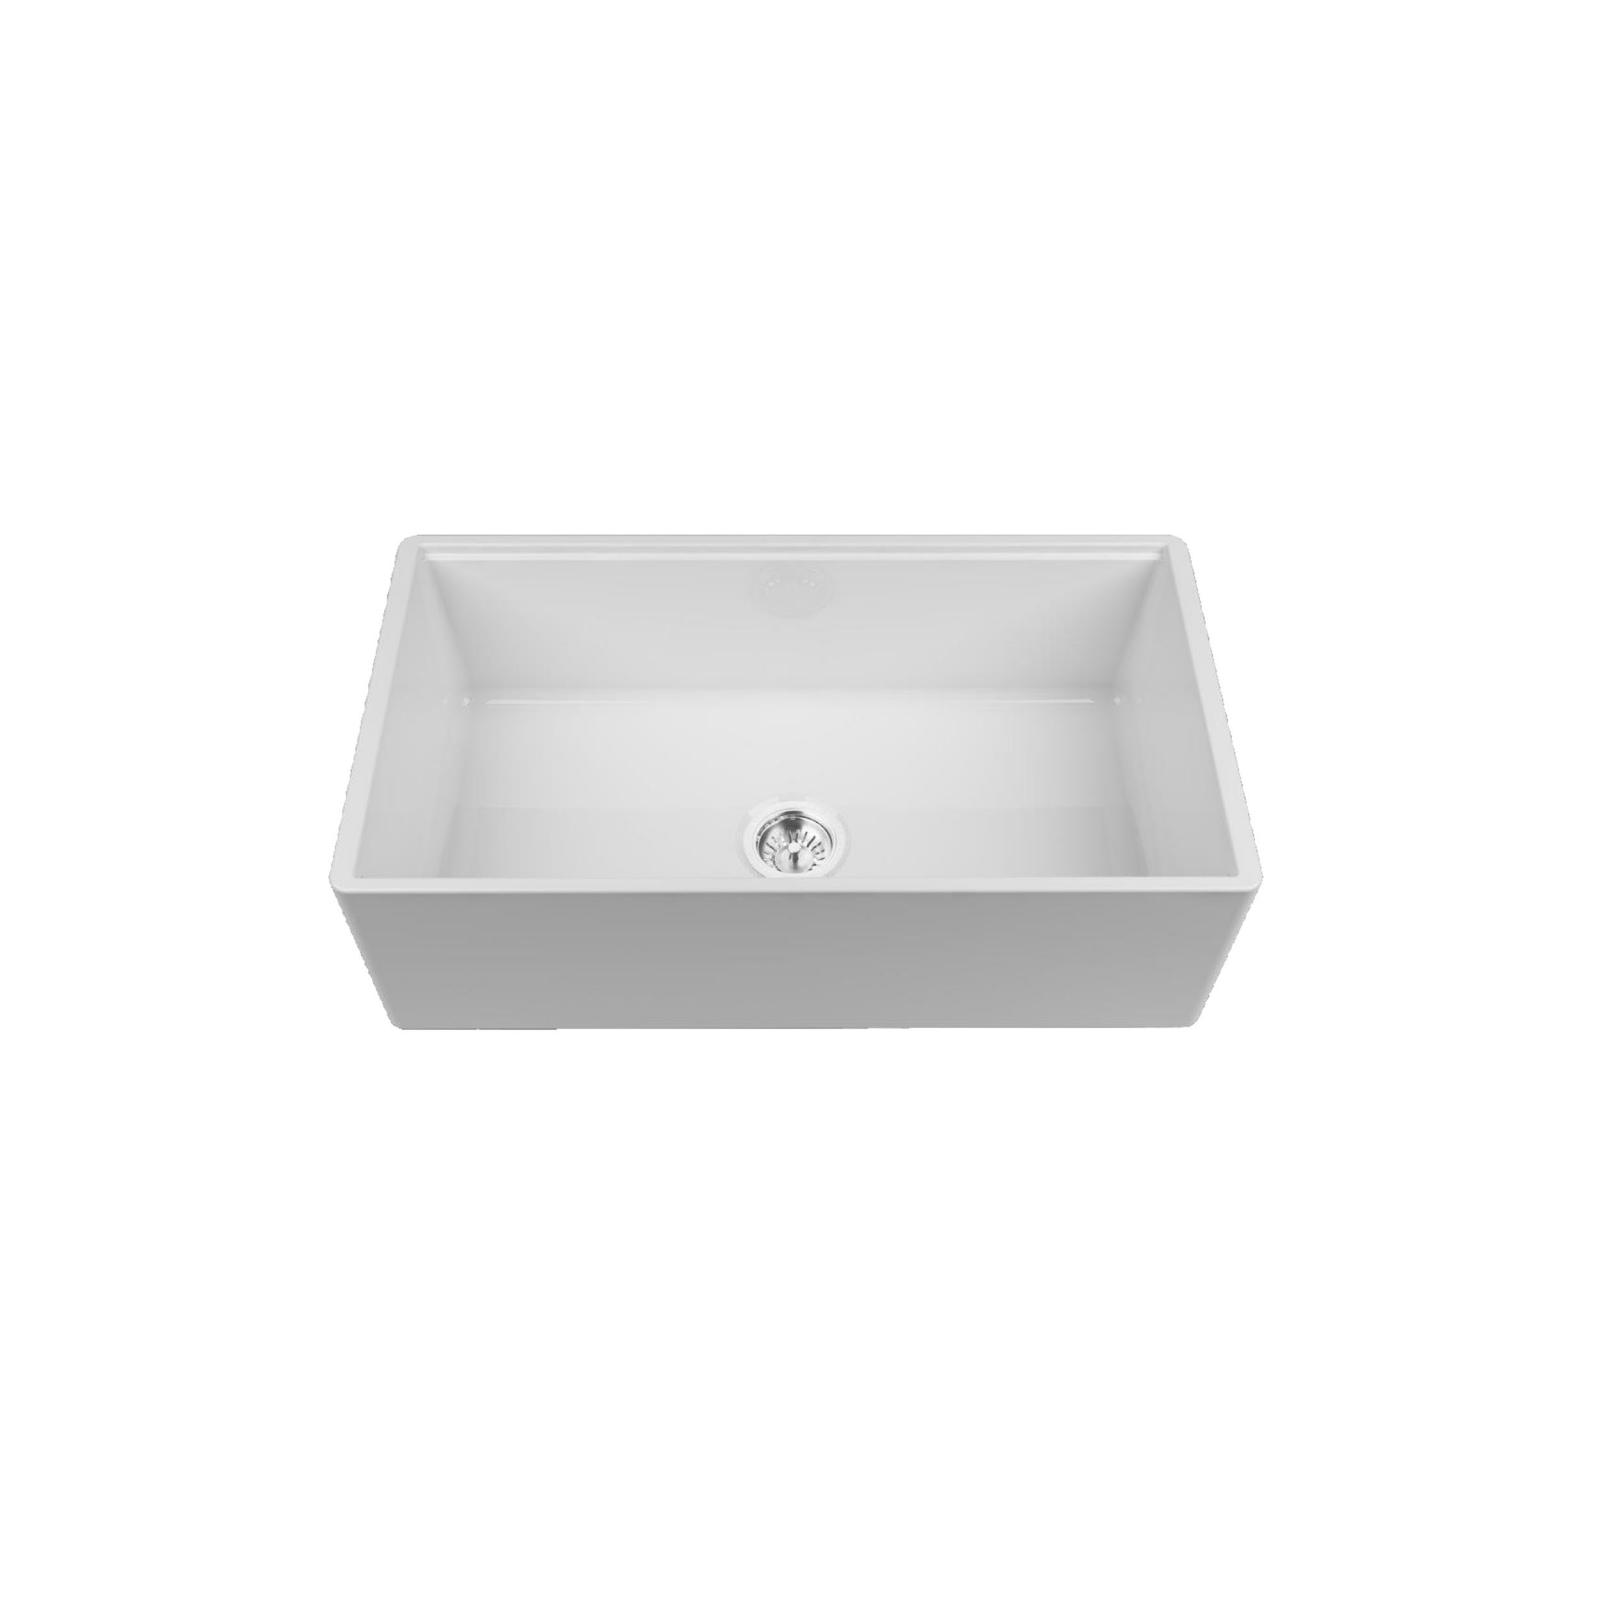 High-quality sink Louis Le Grand III - single bowl, ceramic - 2